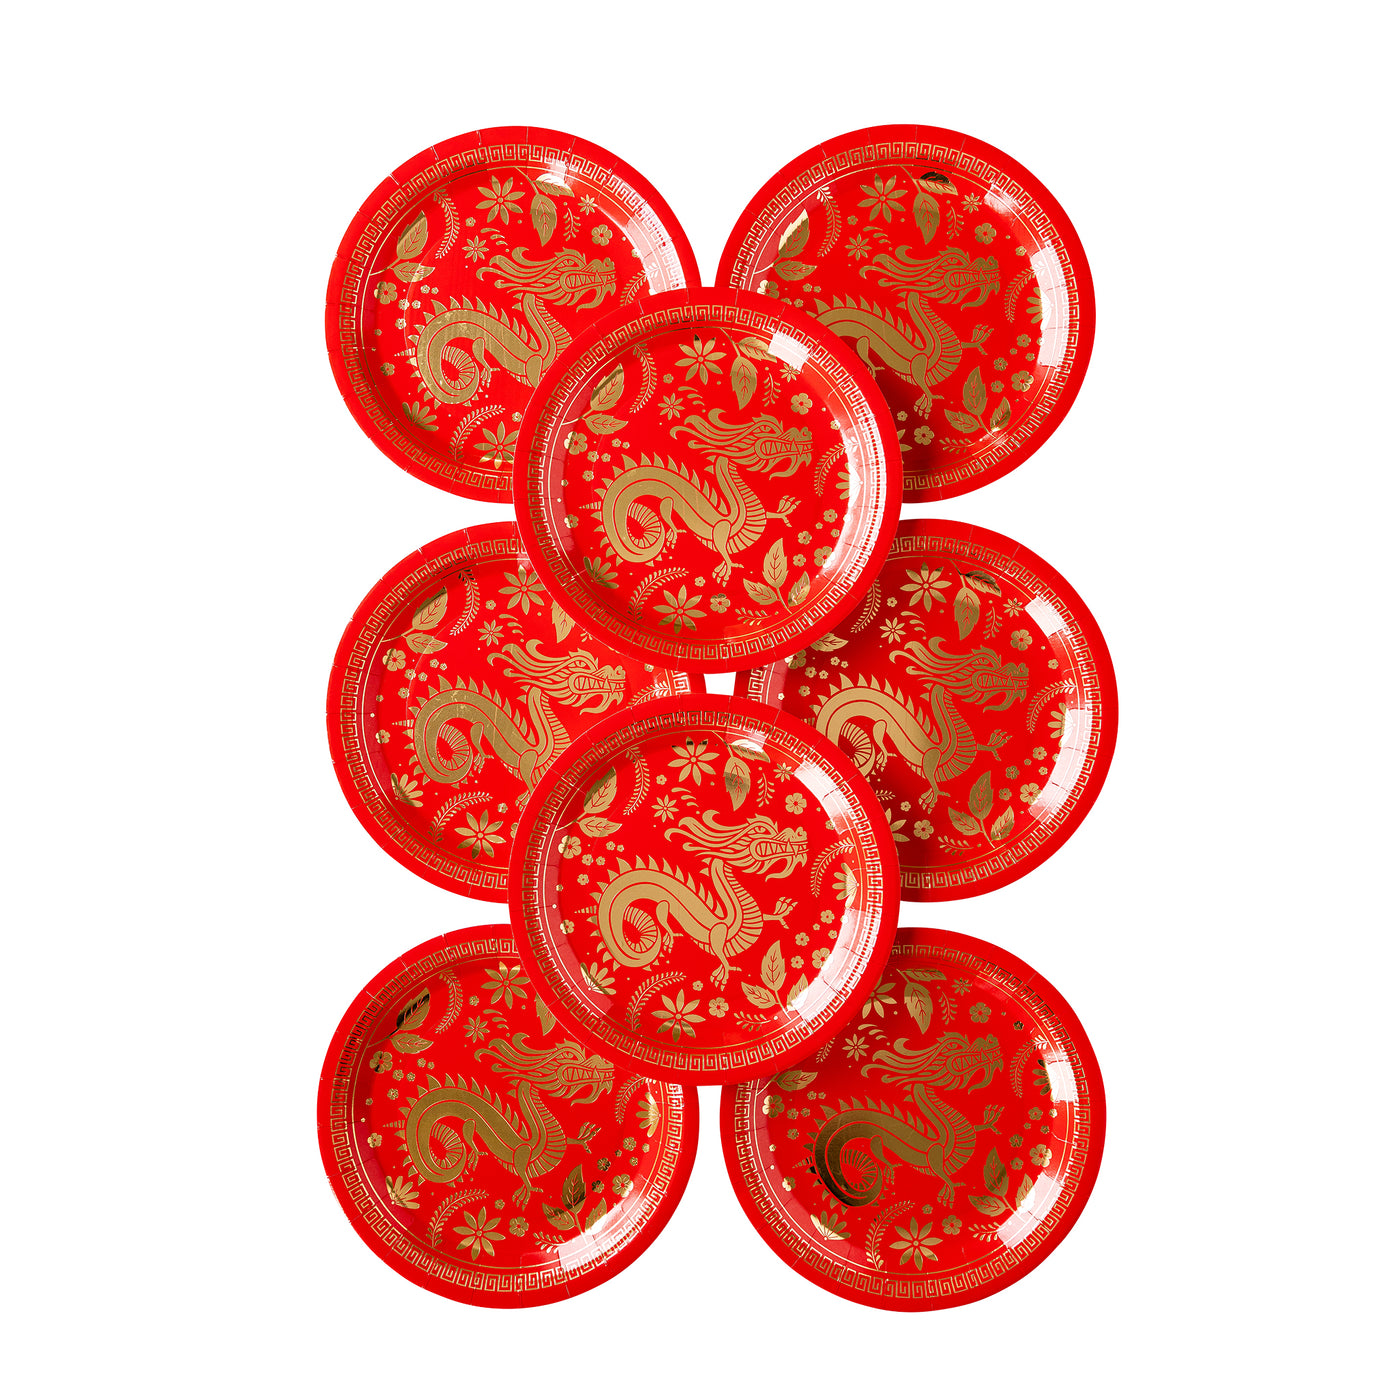 PLNY189 - Lunar New Year Dragon Foliage Paper Plate